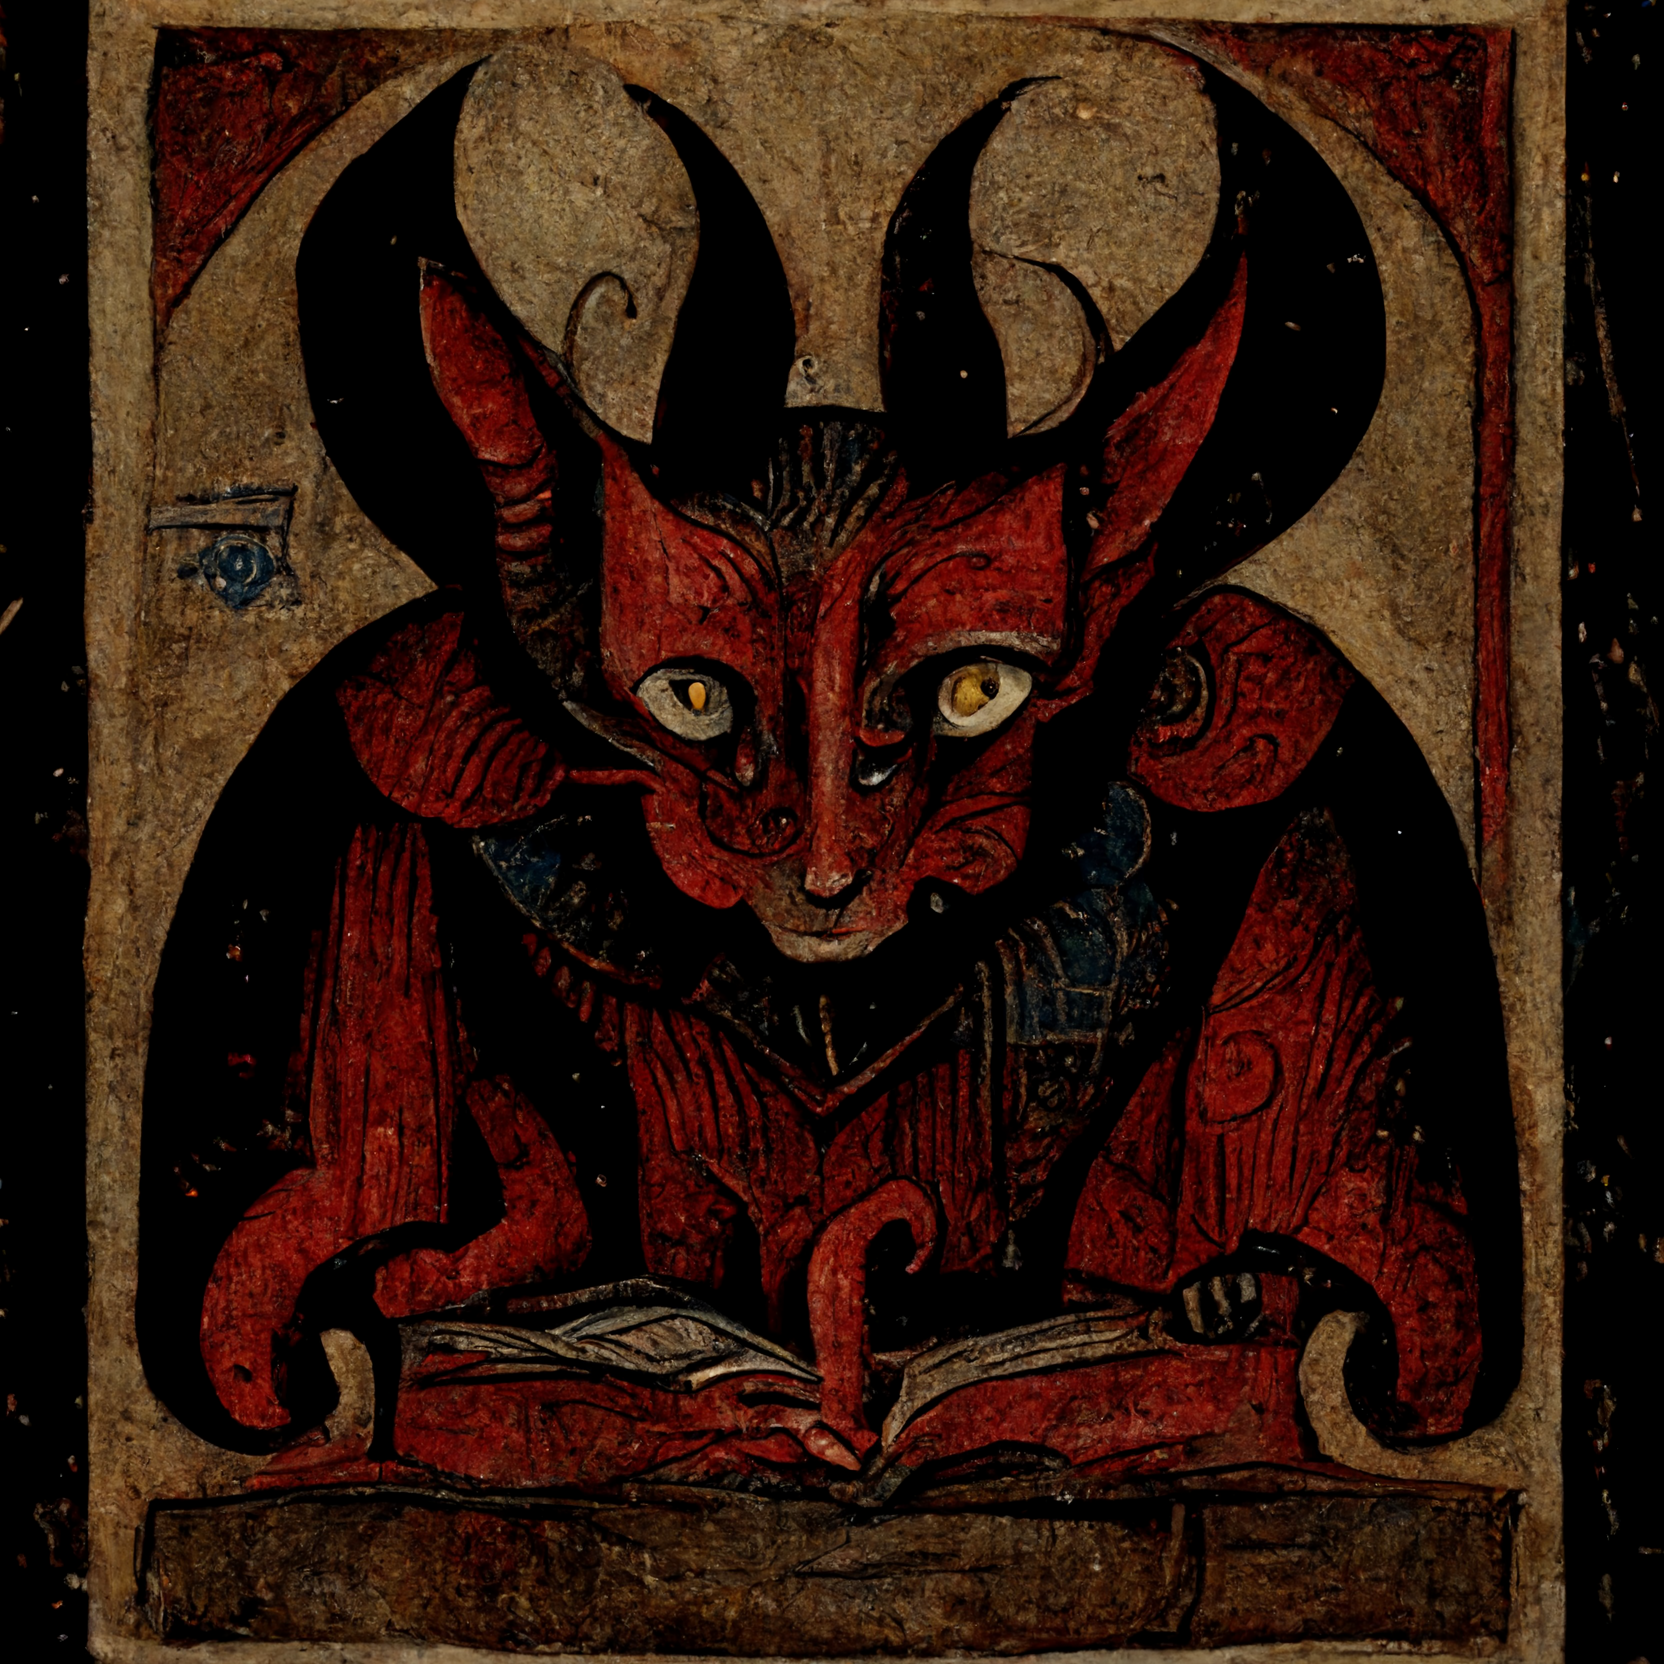 Ulysses_Black_devil_in_the_style_of_a_medieval_manuscript_f704b0e0-1ca7-41cb-b692-b4a967c9c103.png